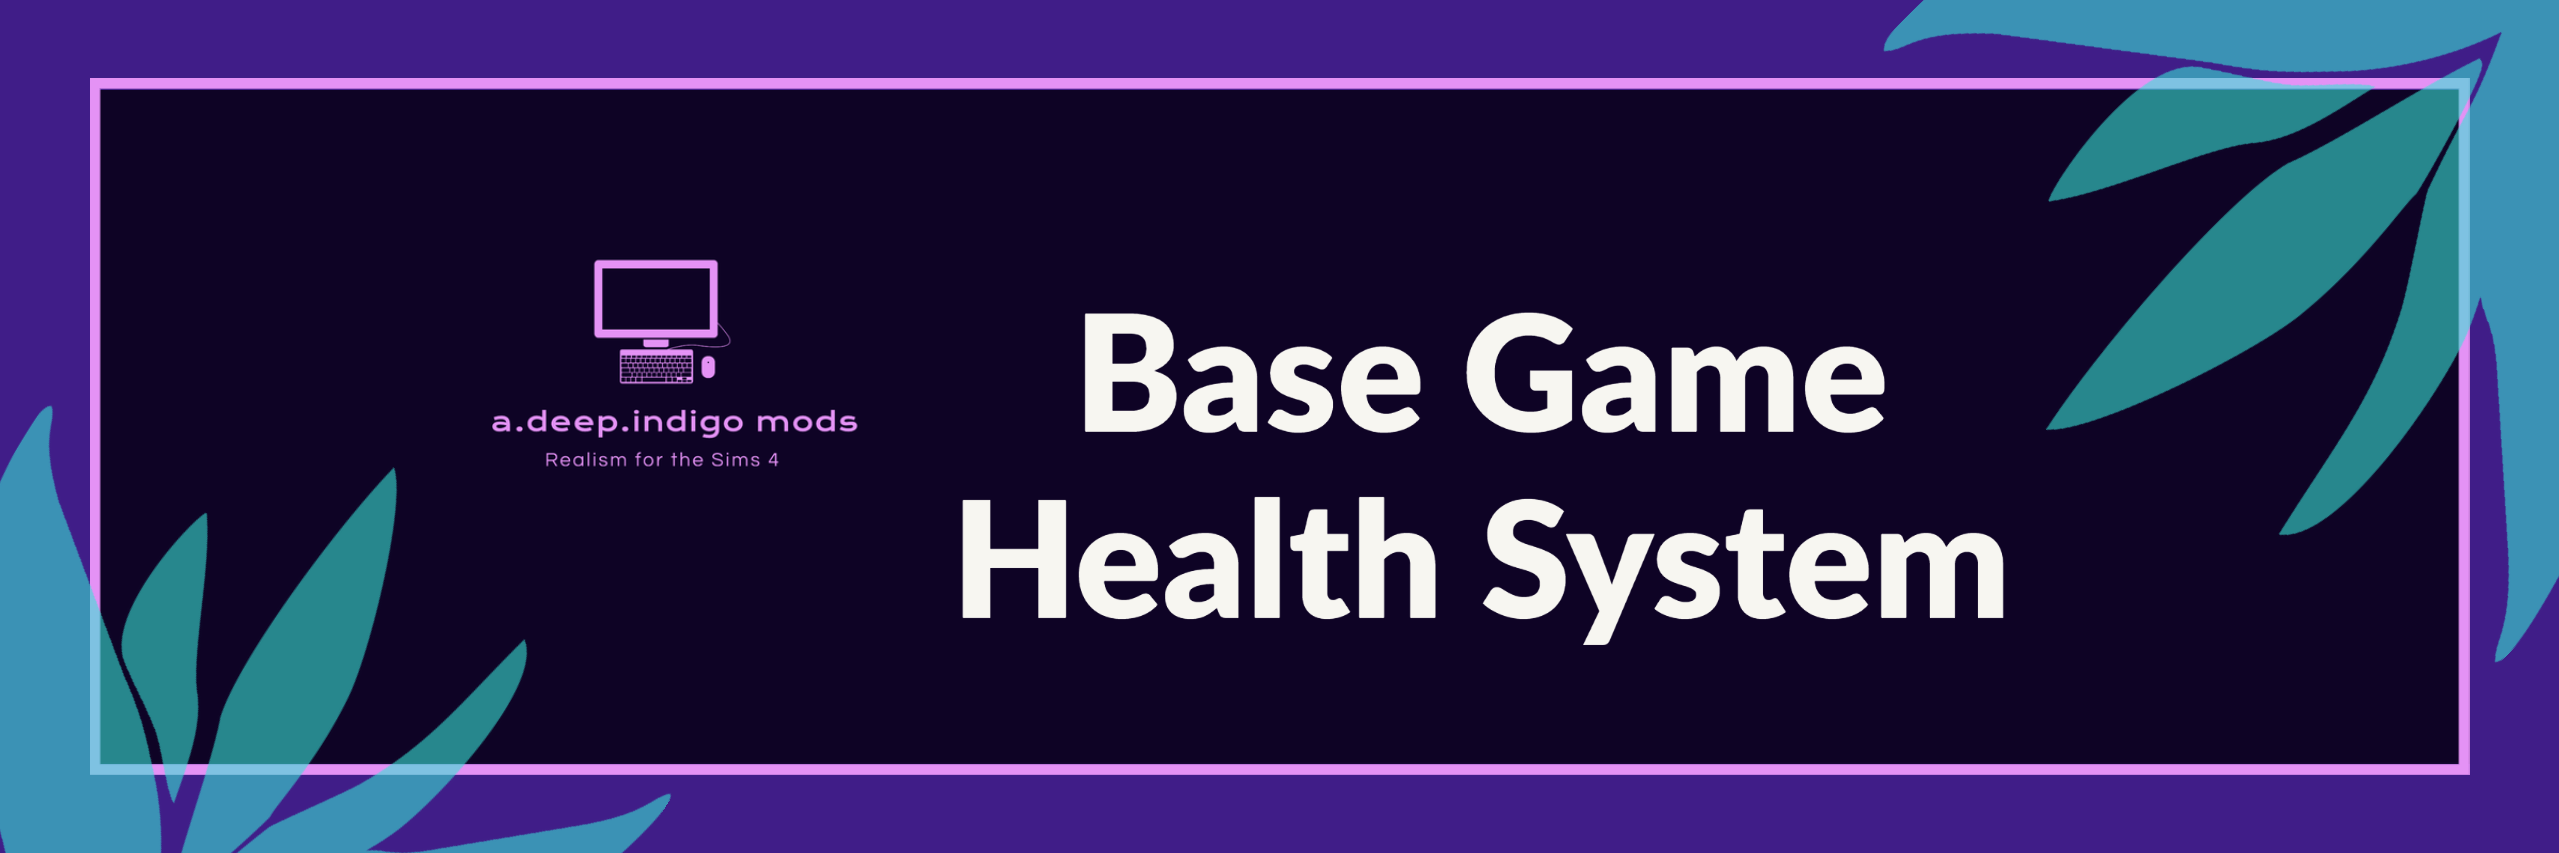 BG Health System